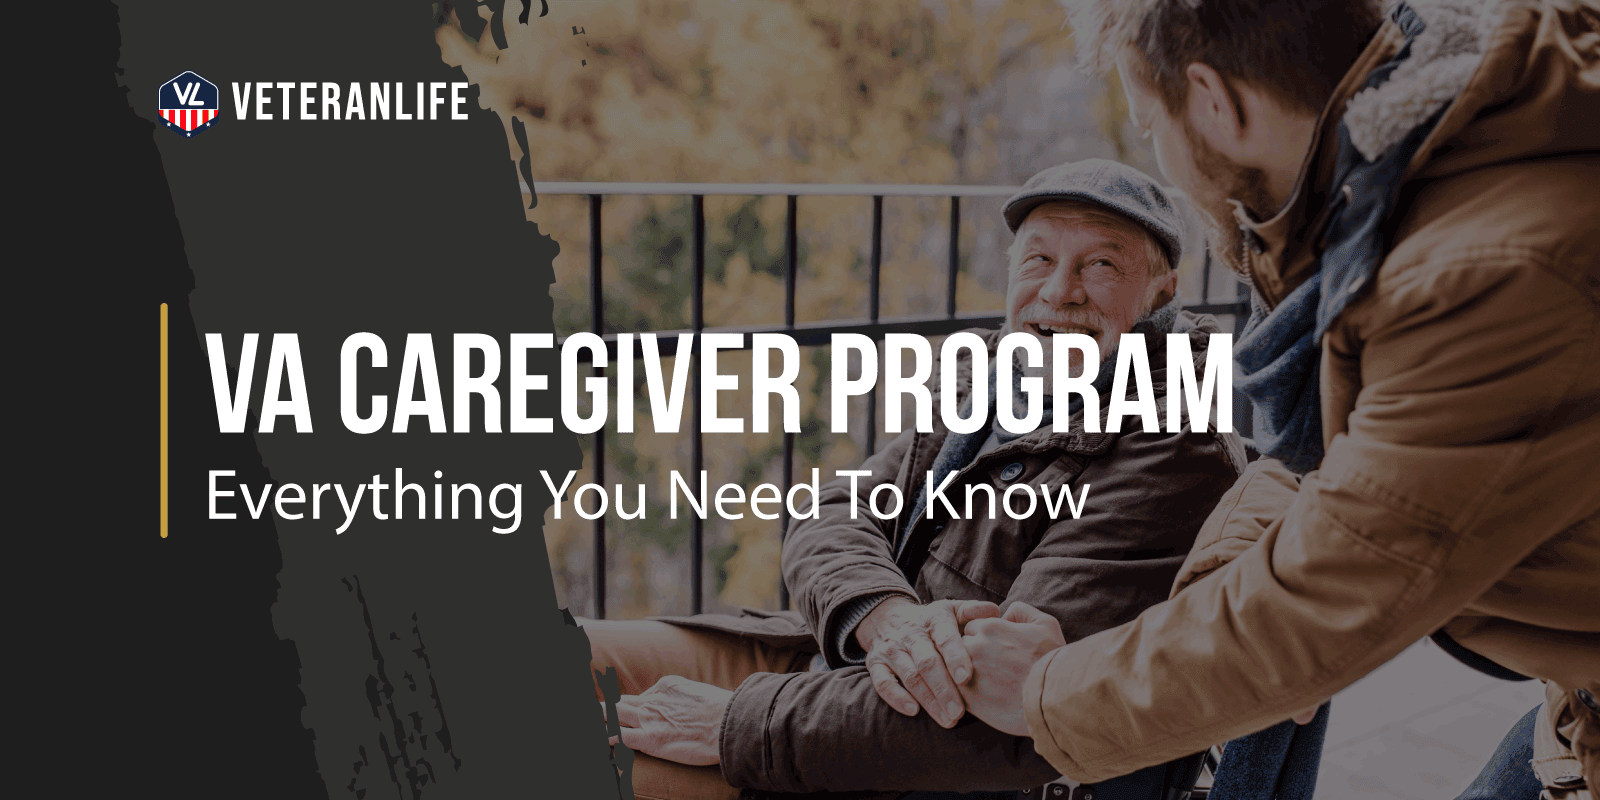 VA Caregiver Program: Everything You Need to Know